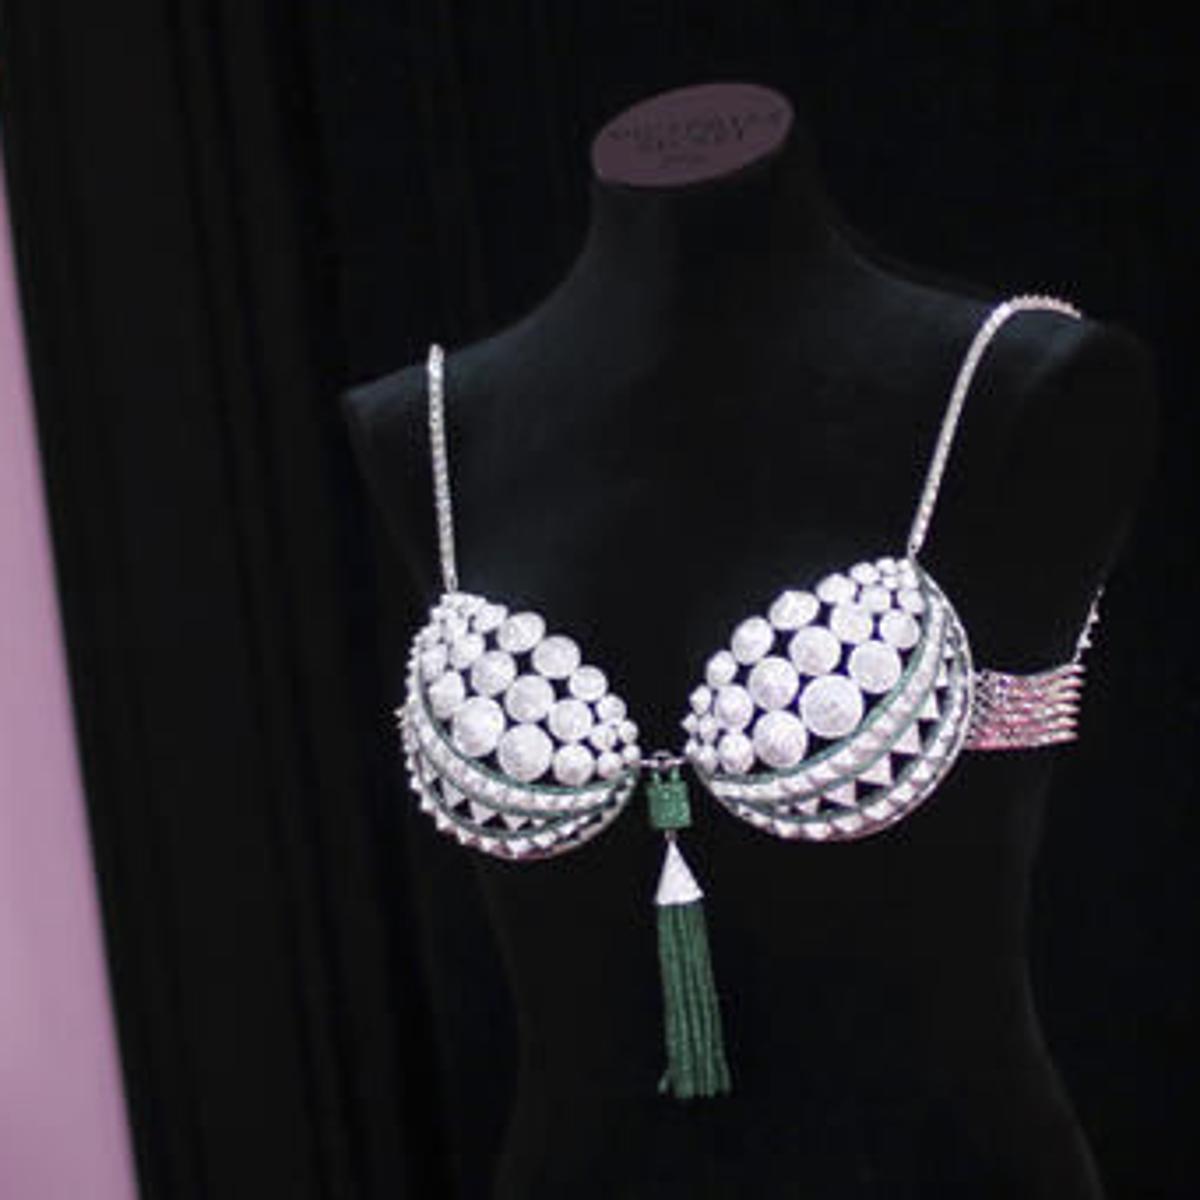 3. A $3 million fantasy bra